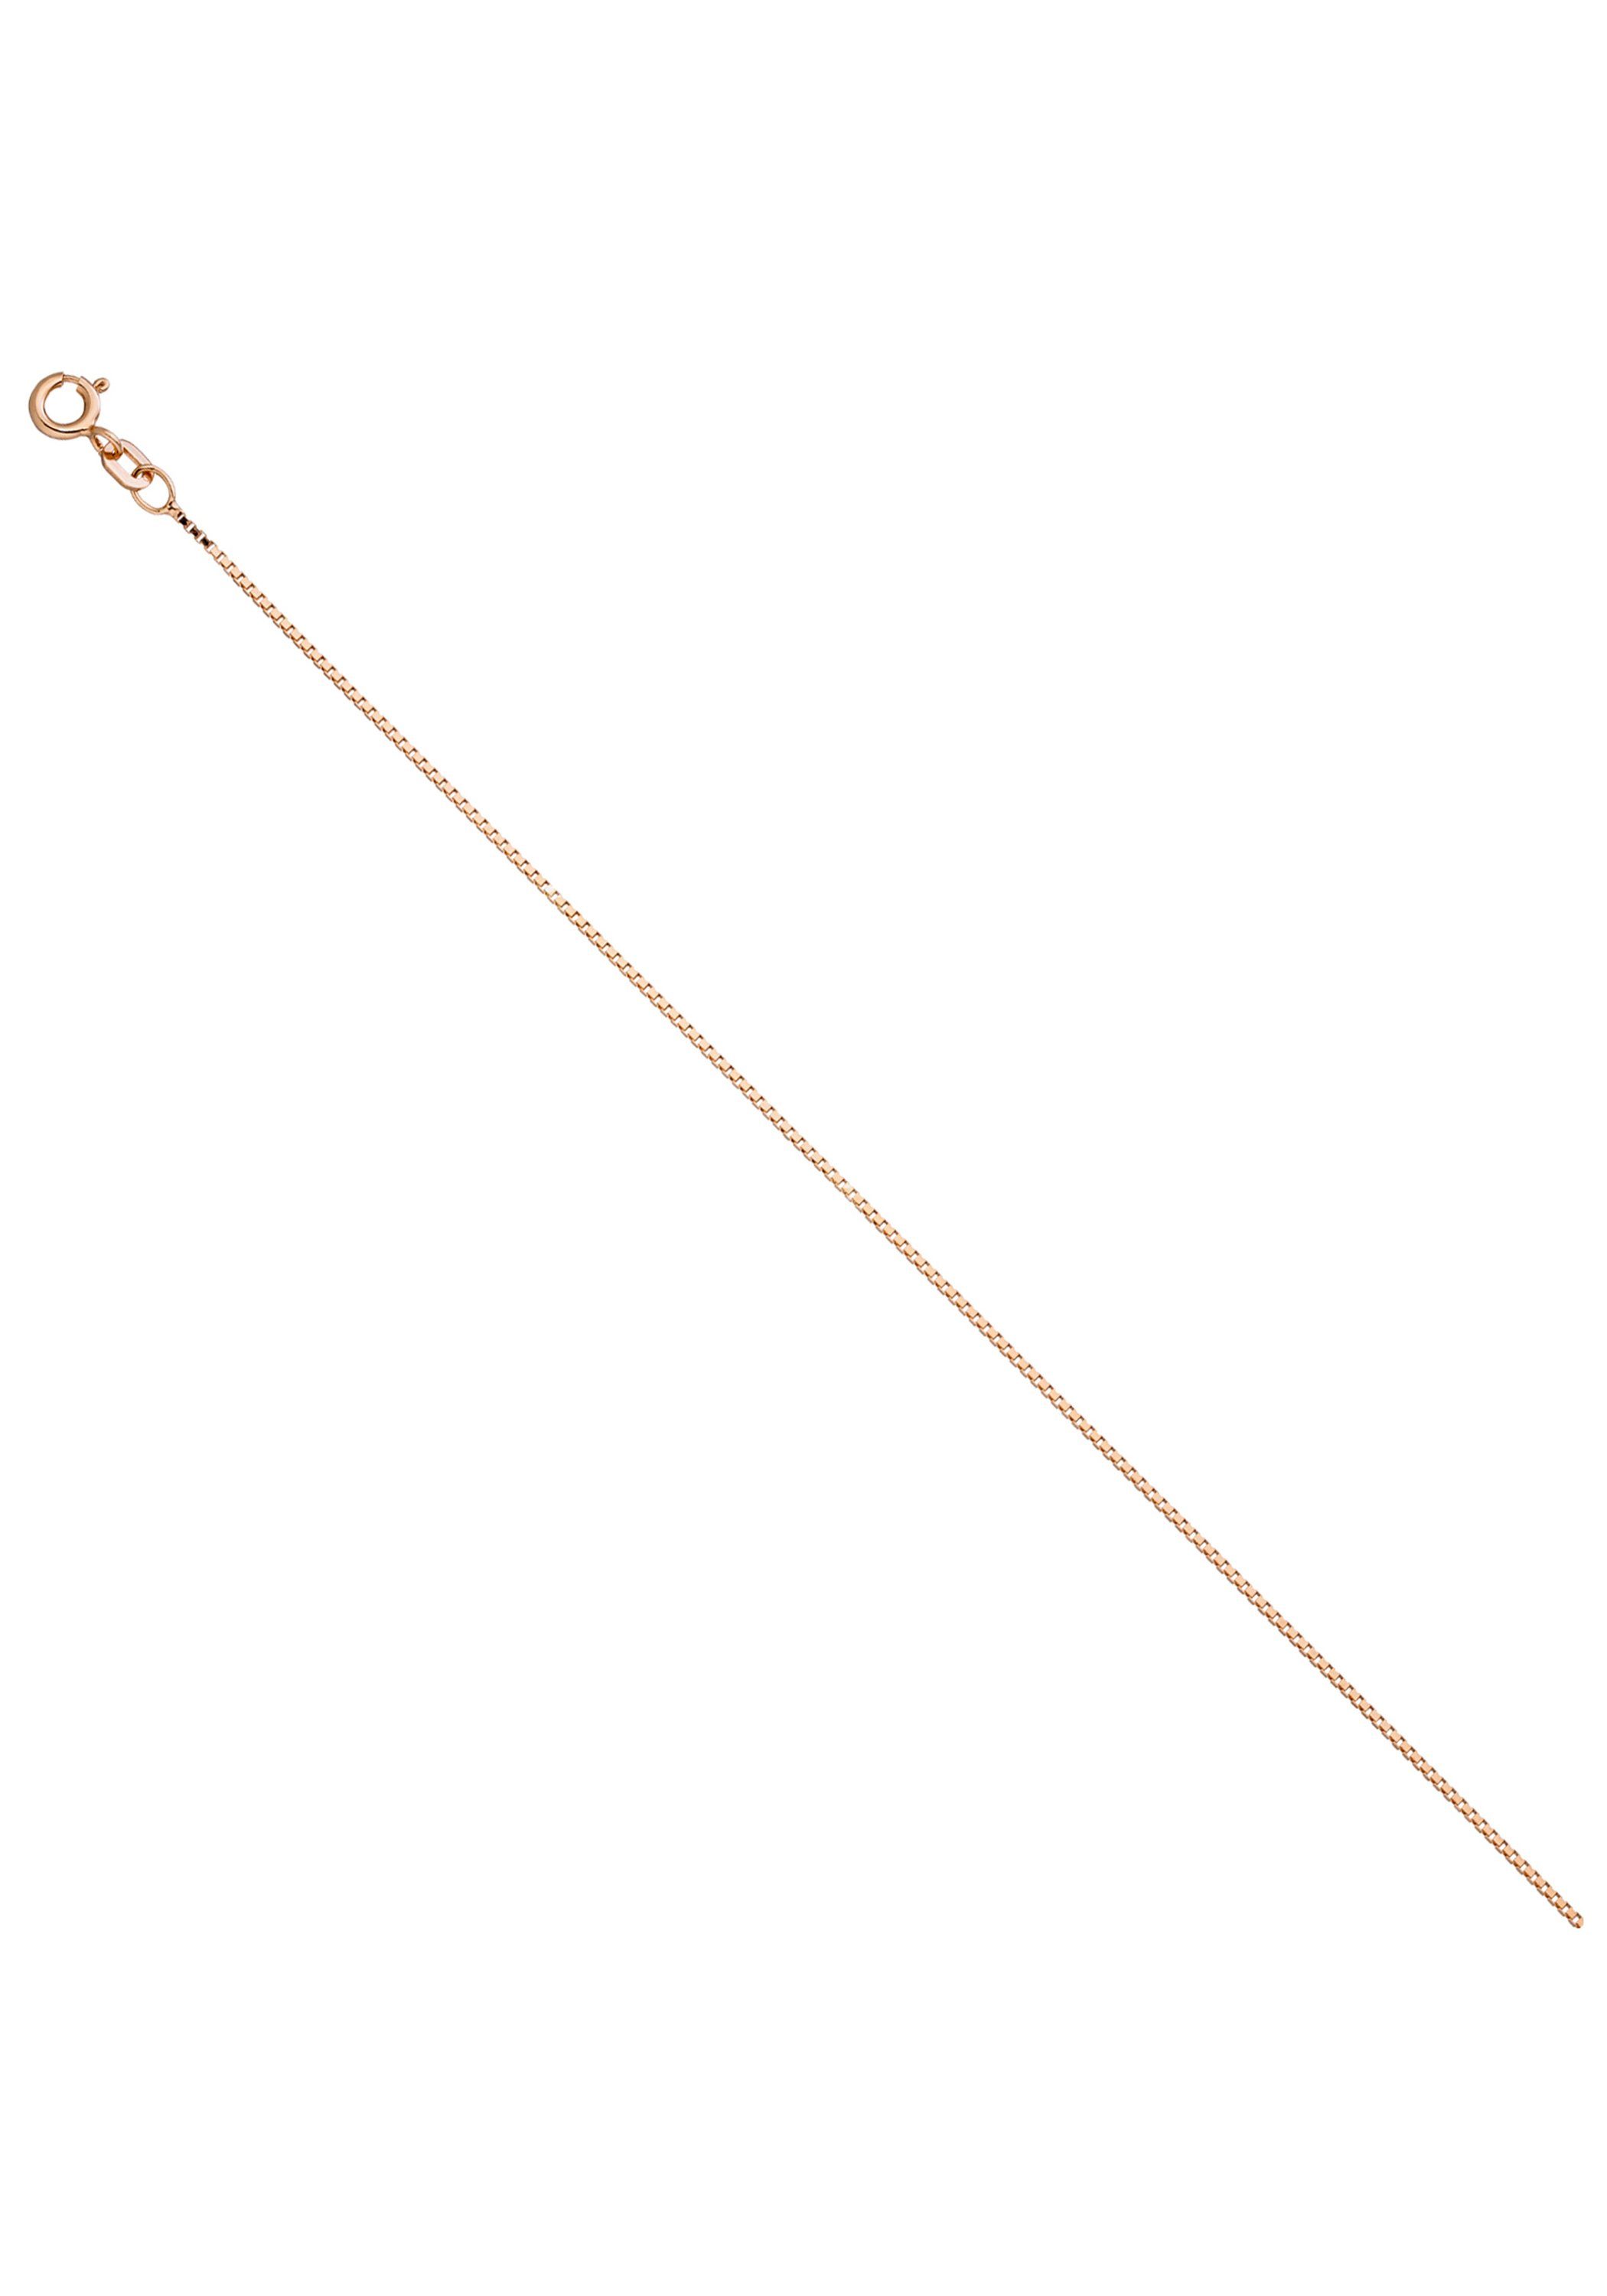 Damen Schmuck JOBO Kette ohne Anhänger, Venezianerkette 925 Silber rosé vergoldet 42 cm